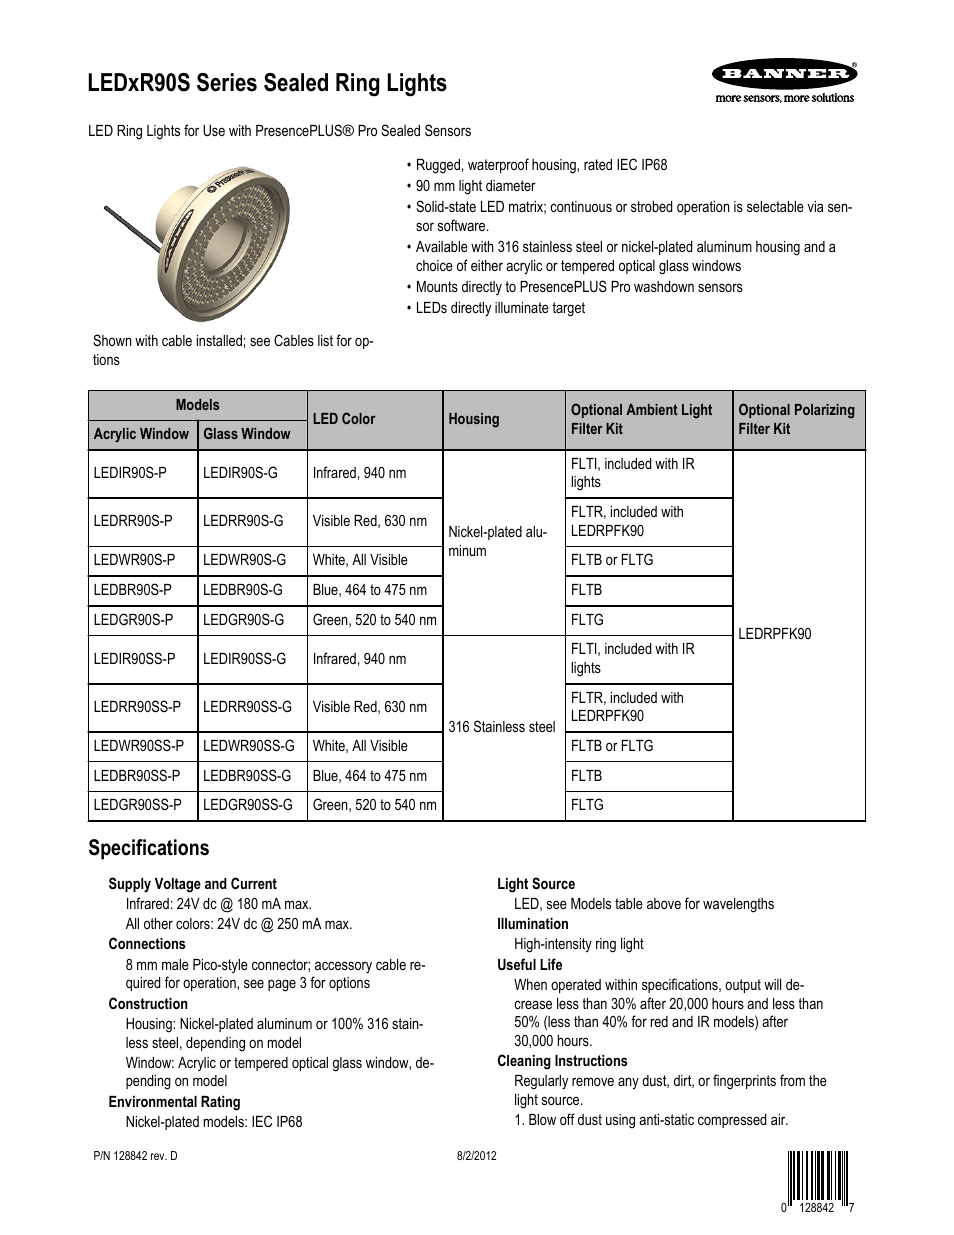 Sealed PresencePLUS Pro LED Ring Lights